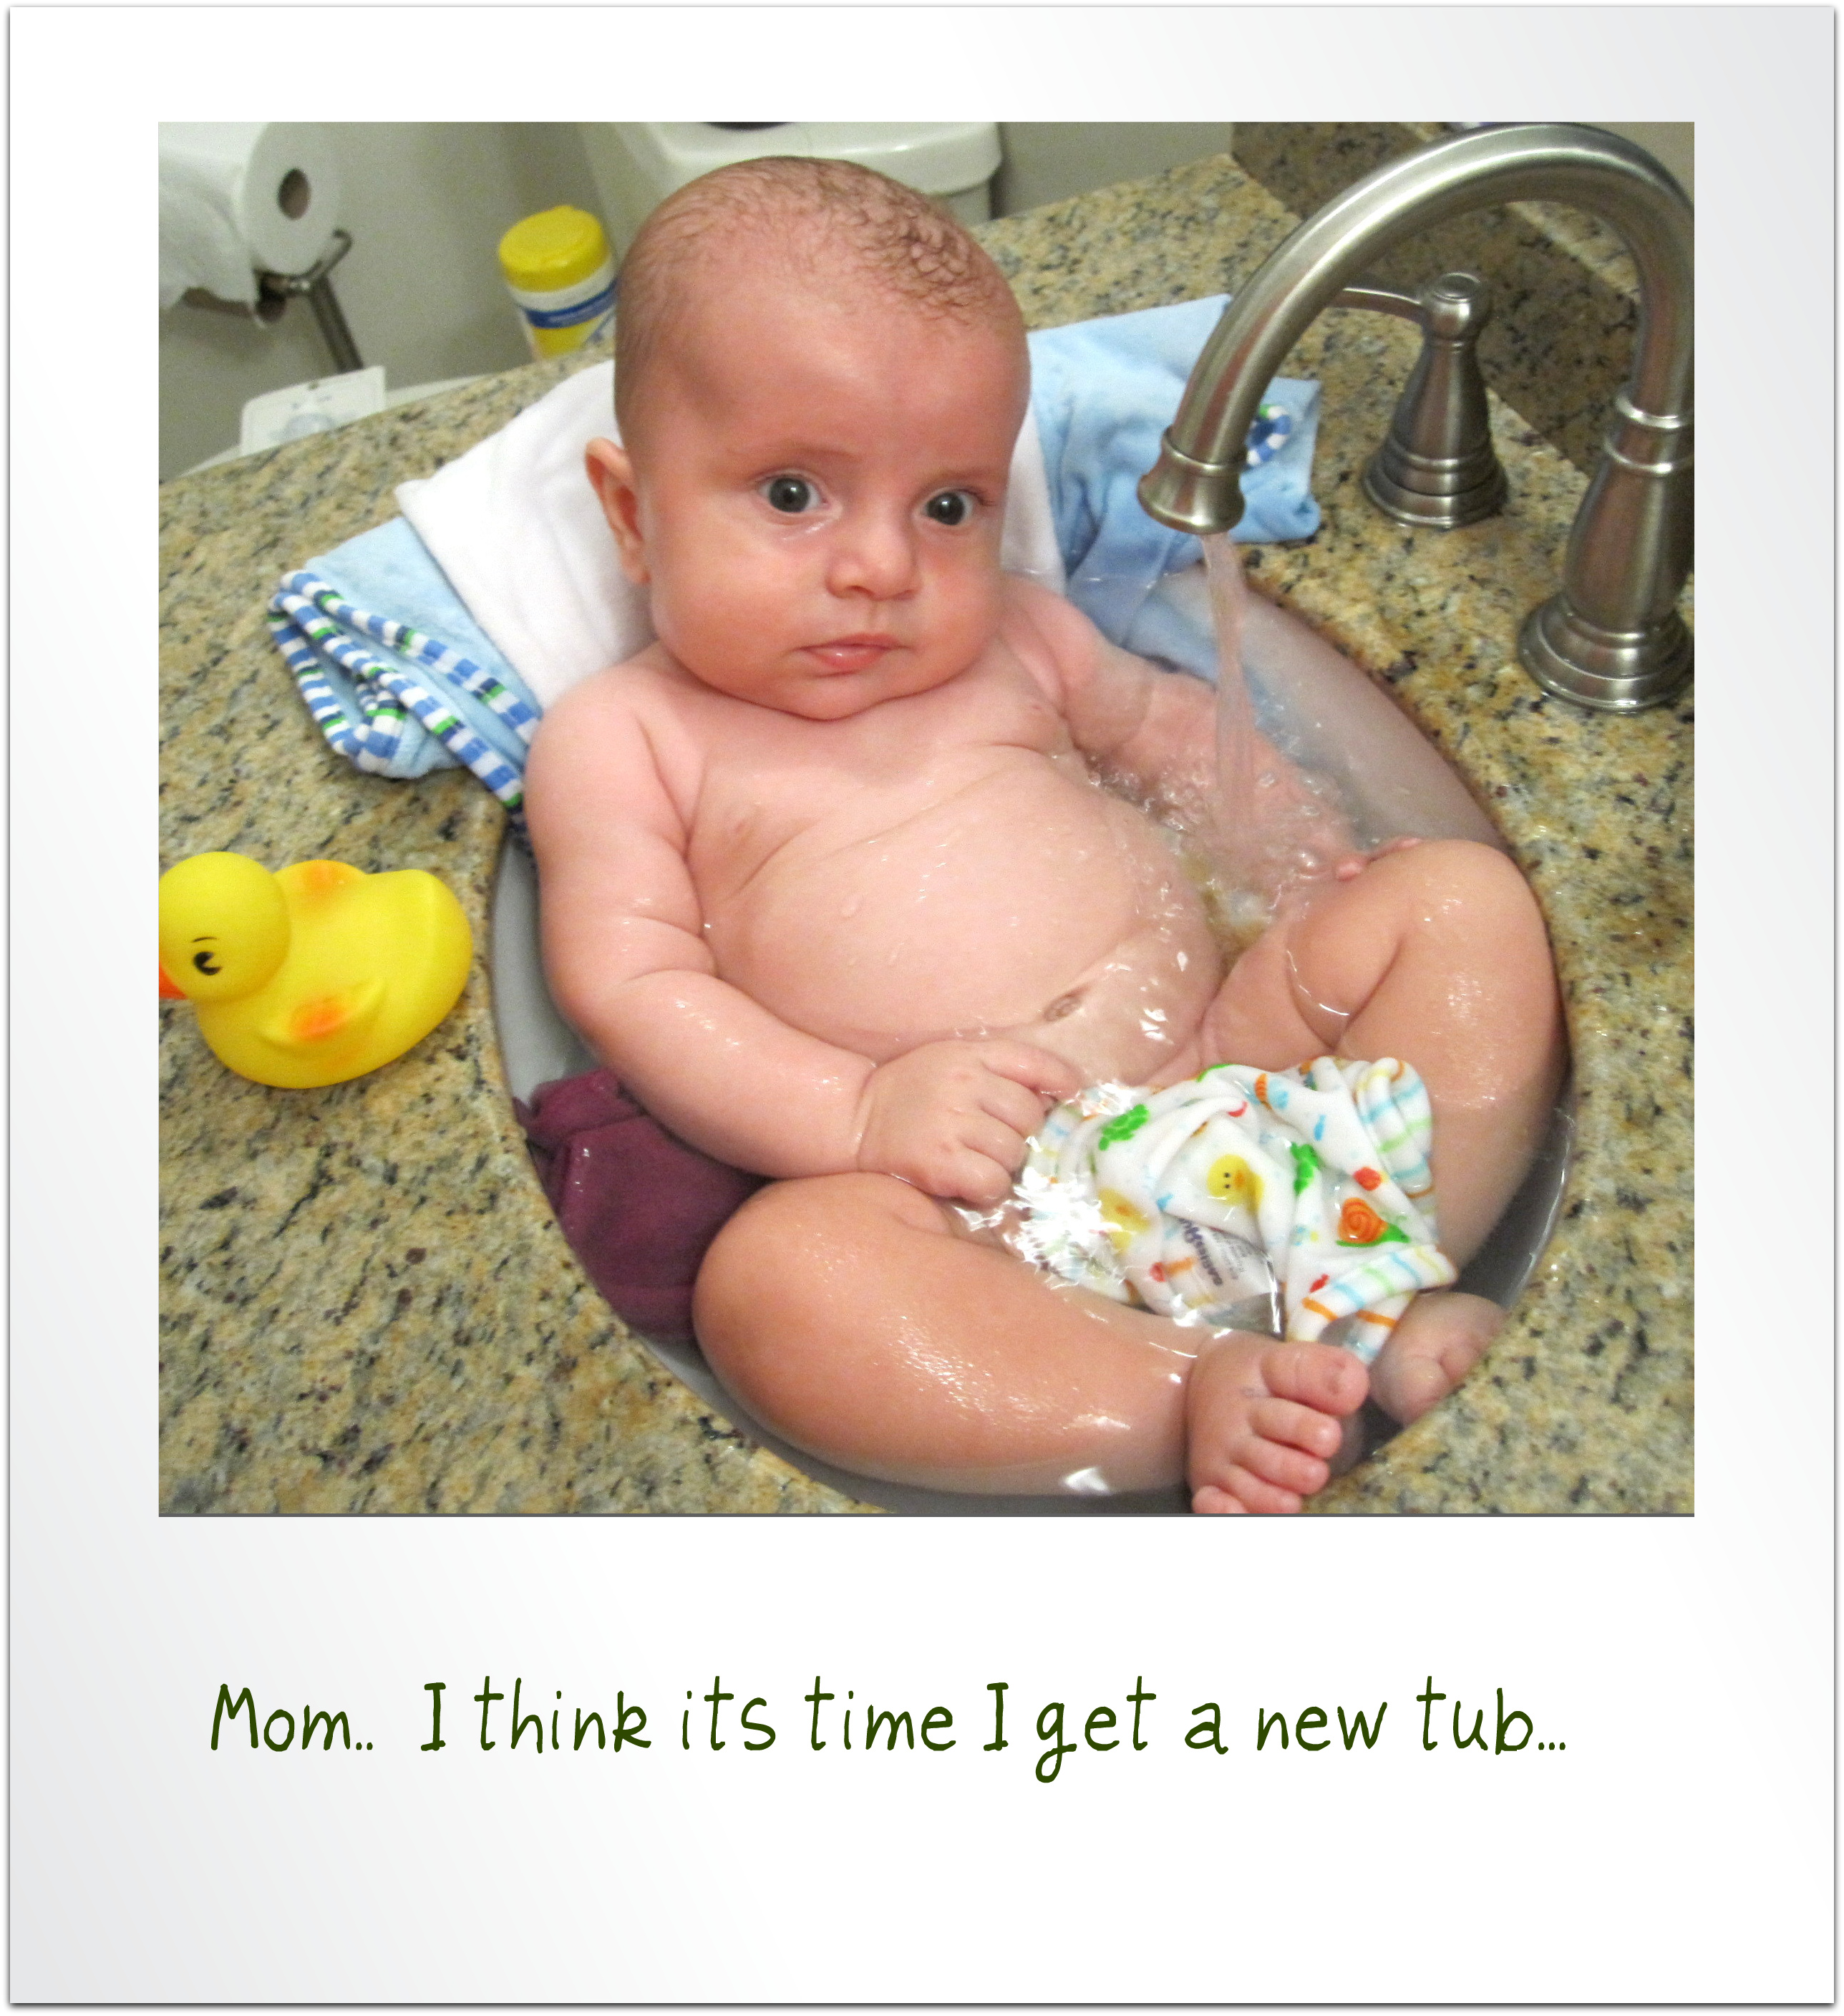 baby bath tub sponge